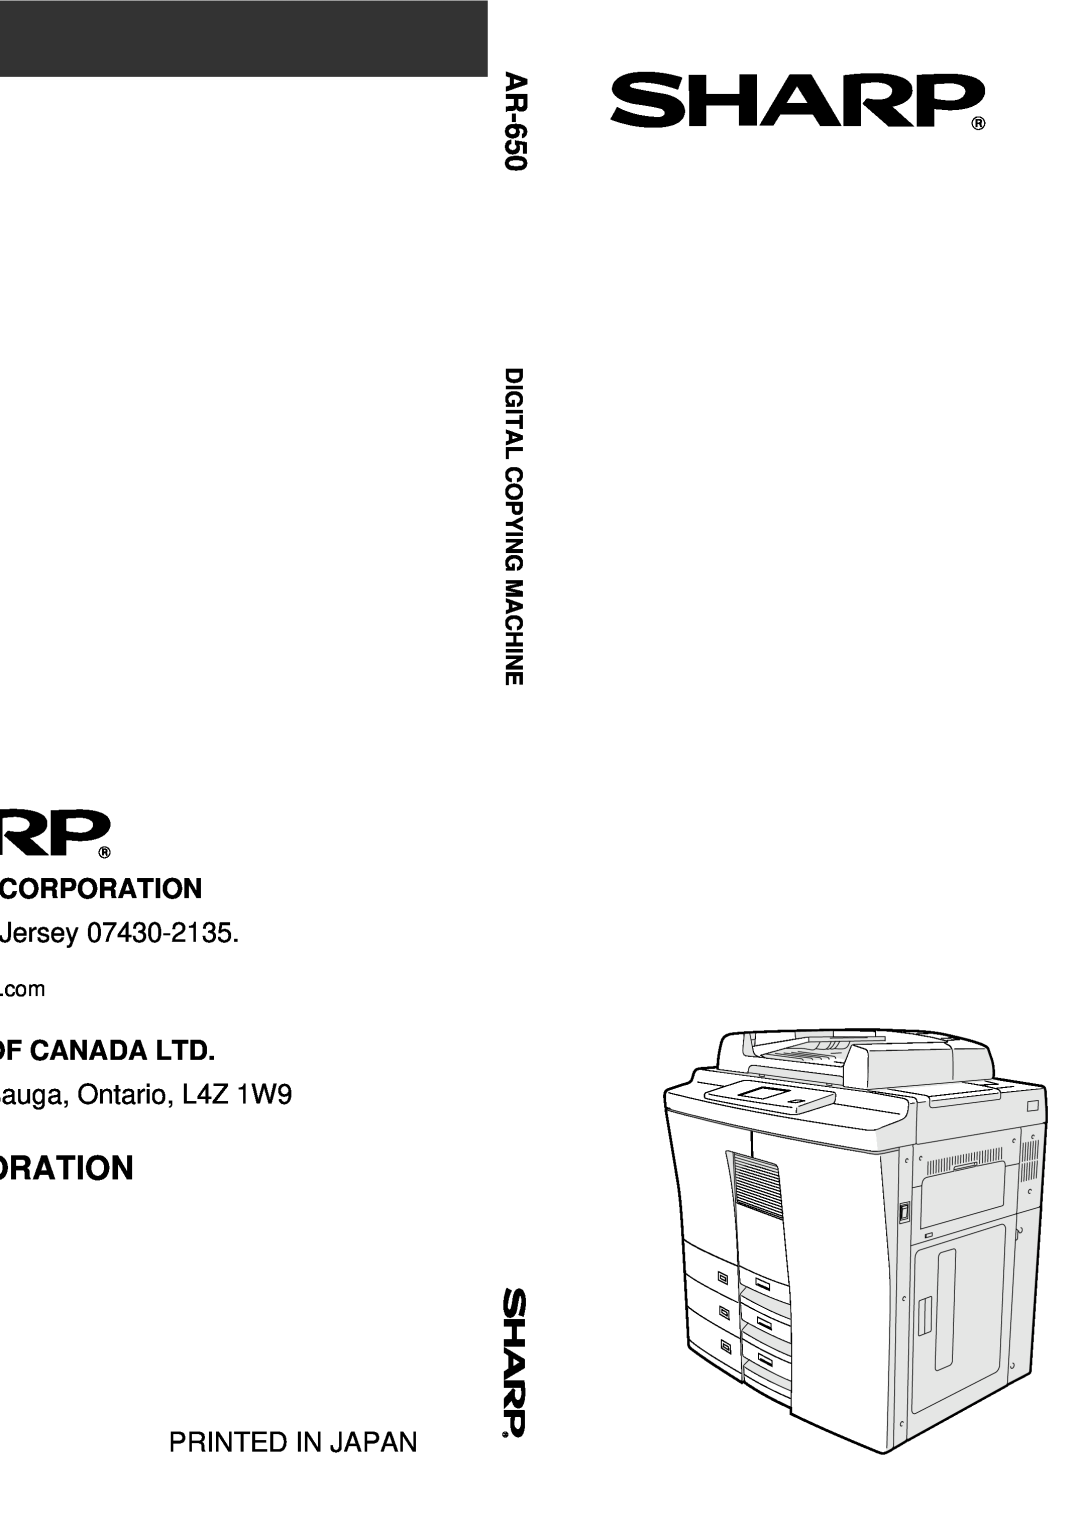 Sharp AR-650 Oration, Corporation, Jersey, auga, Ontario, L4Z 1W9, Digital Copying Machine, Printed In Japan 